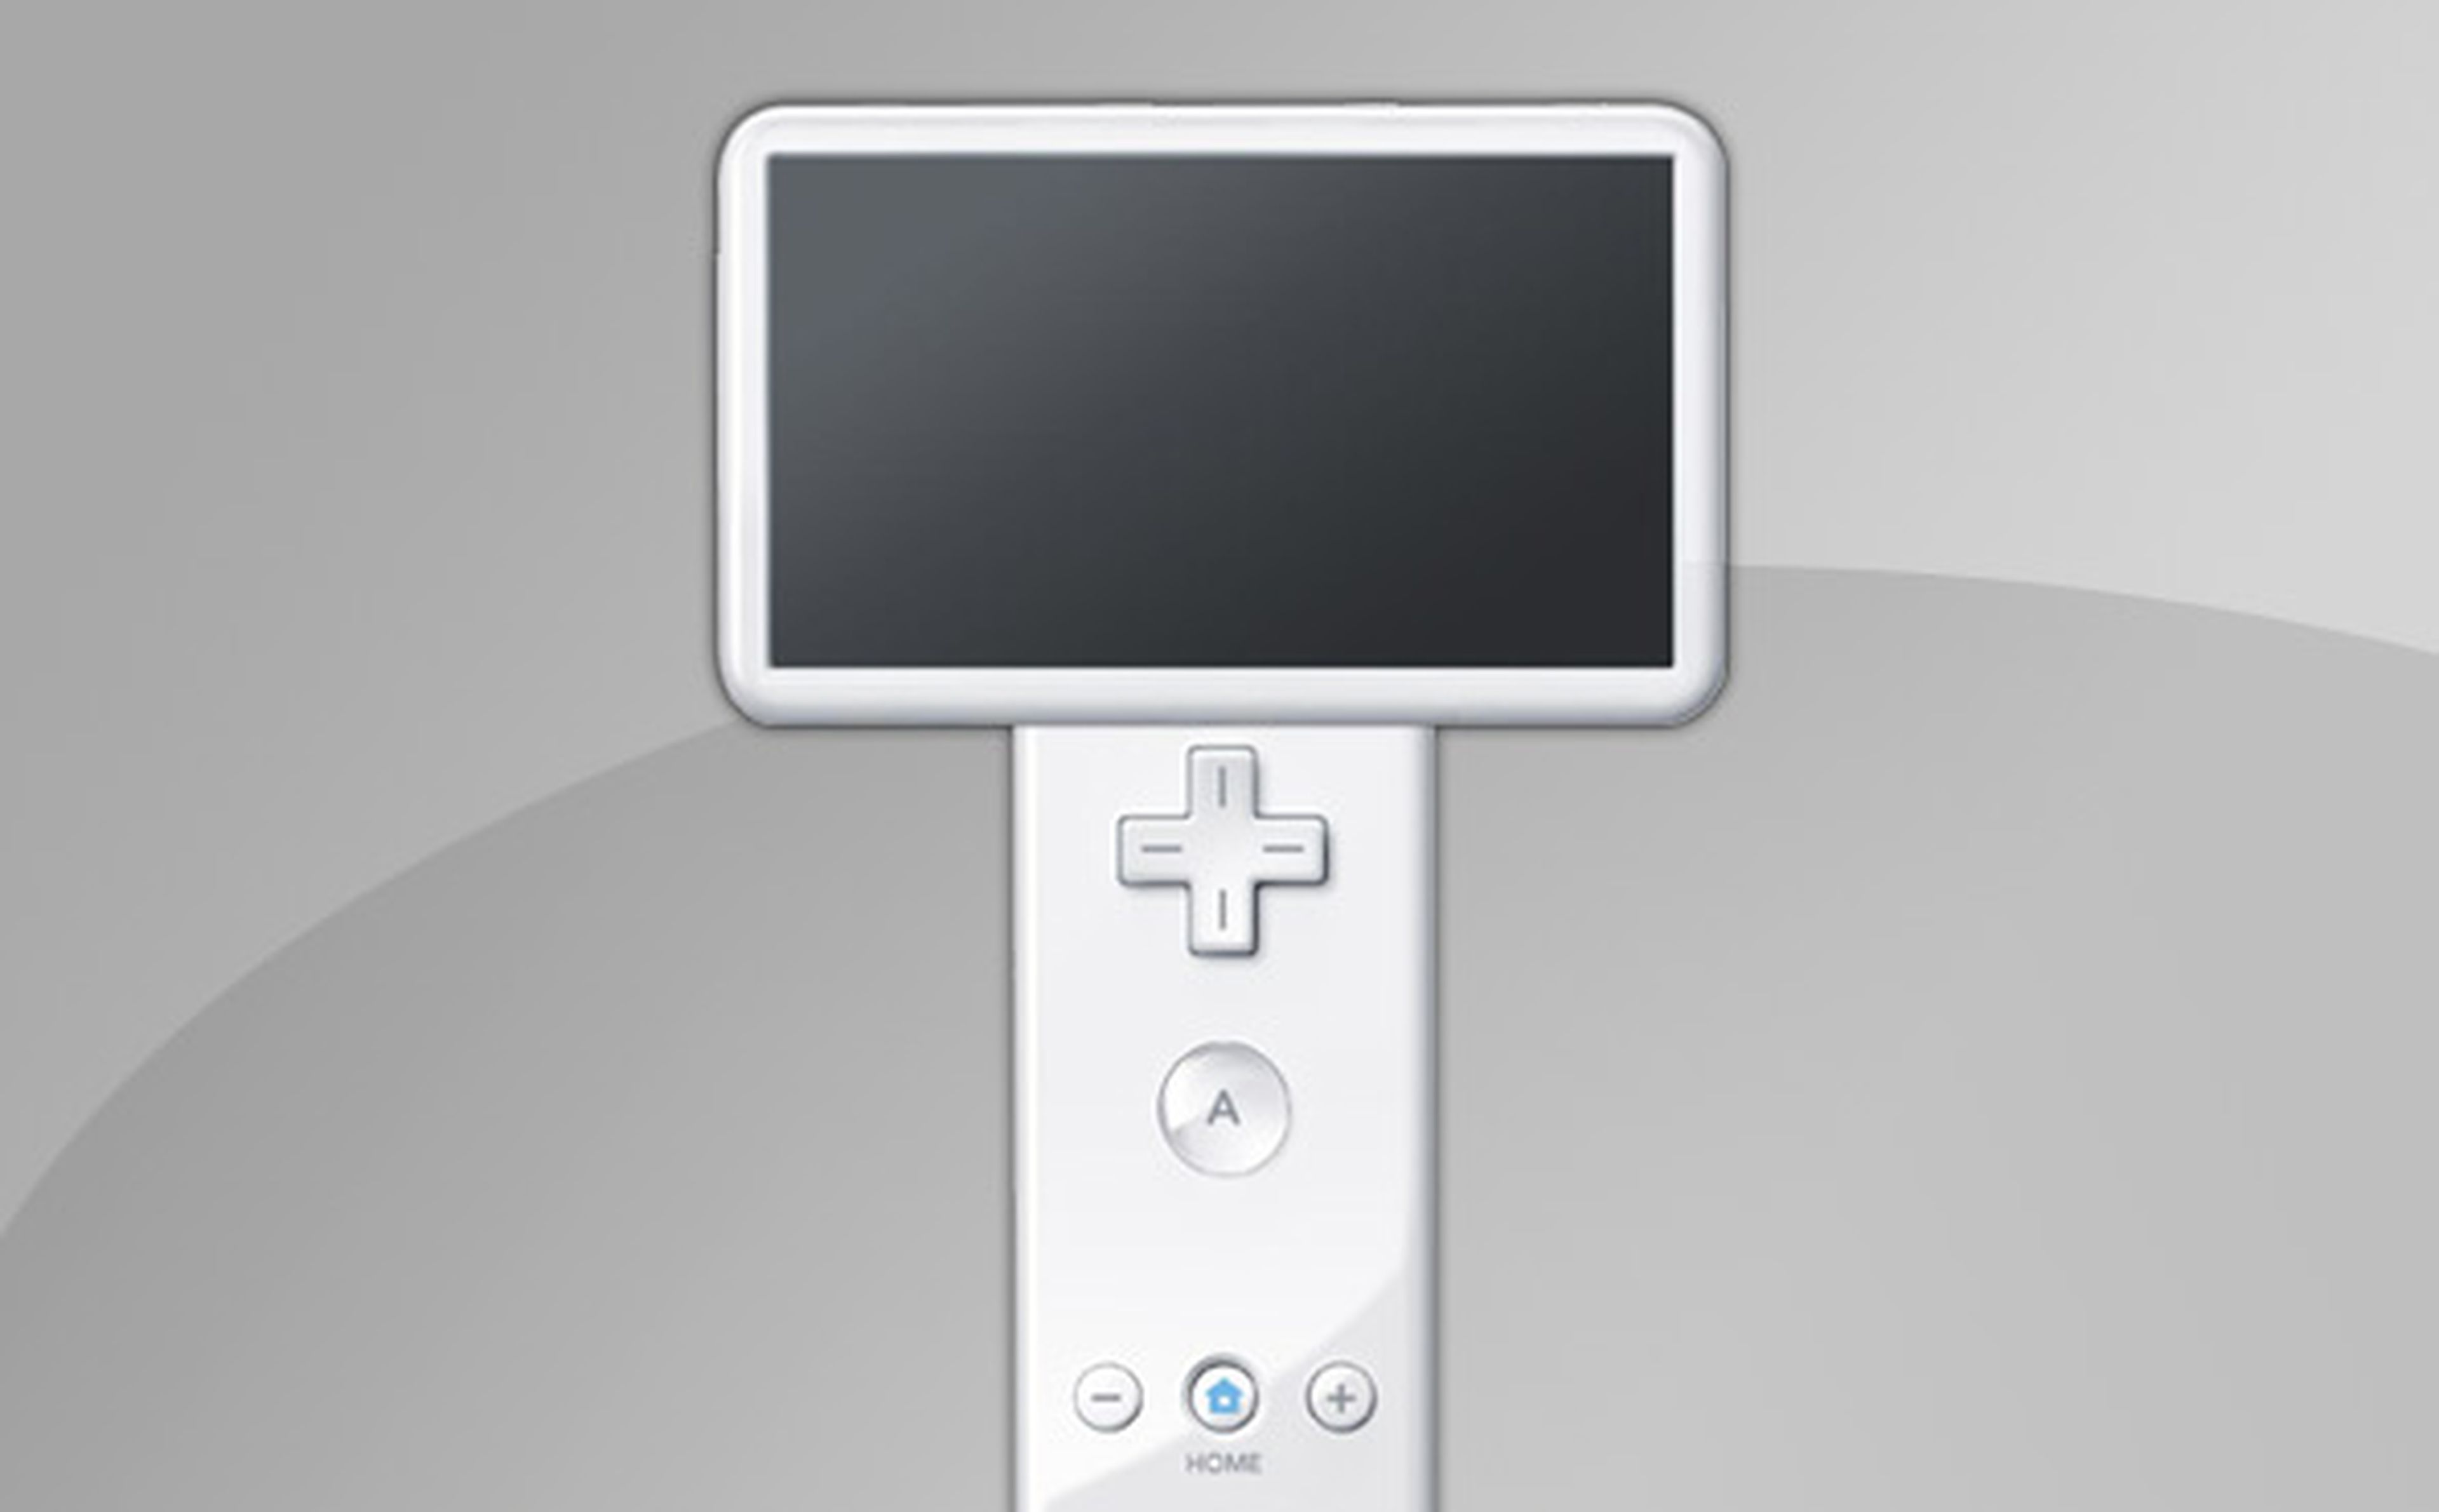 ¿Wii remote tendrá pantalla táctil?